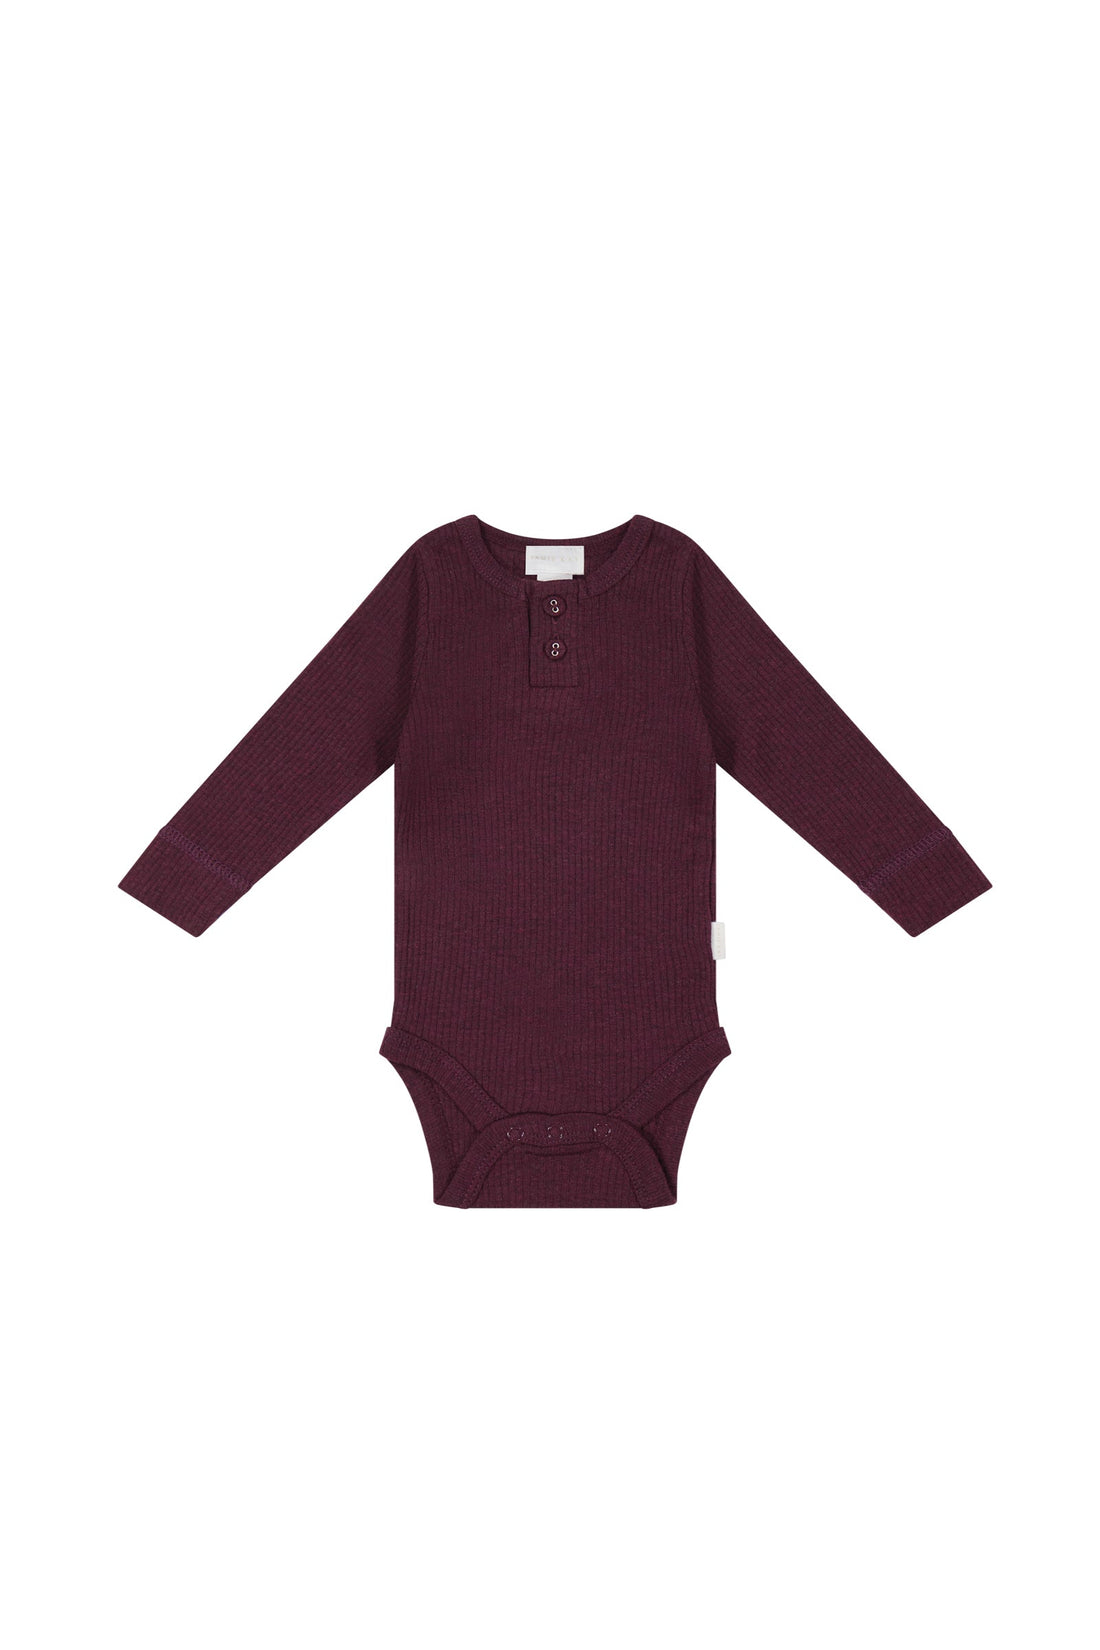 Organic Cotton Modal Long Sleeve Bodysuit - Sugar Plum Marle Childrens Bodysuit from Jamie Kay USA